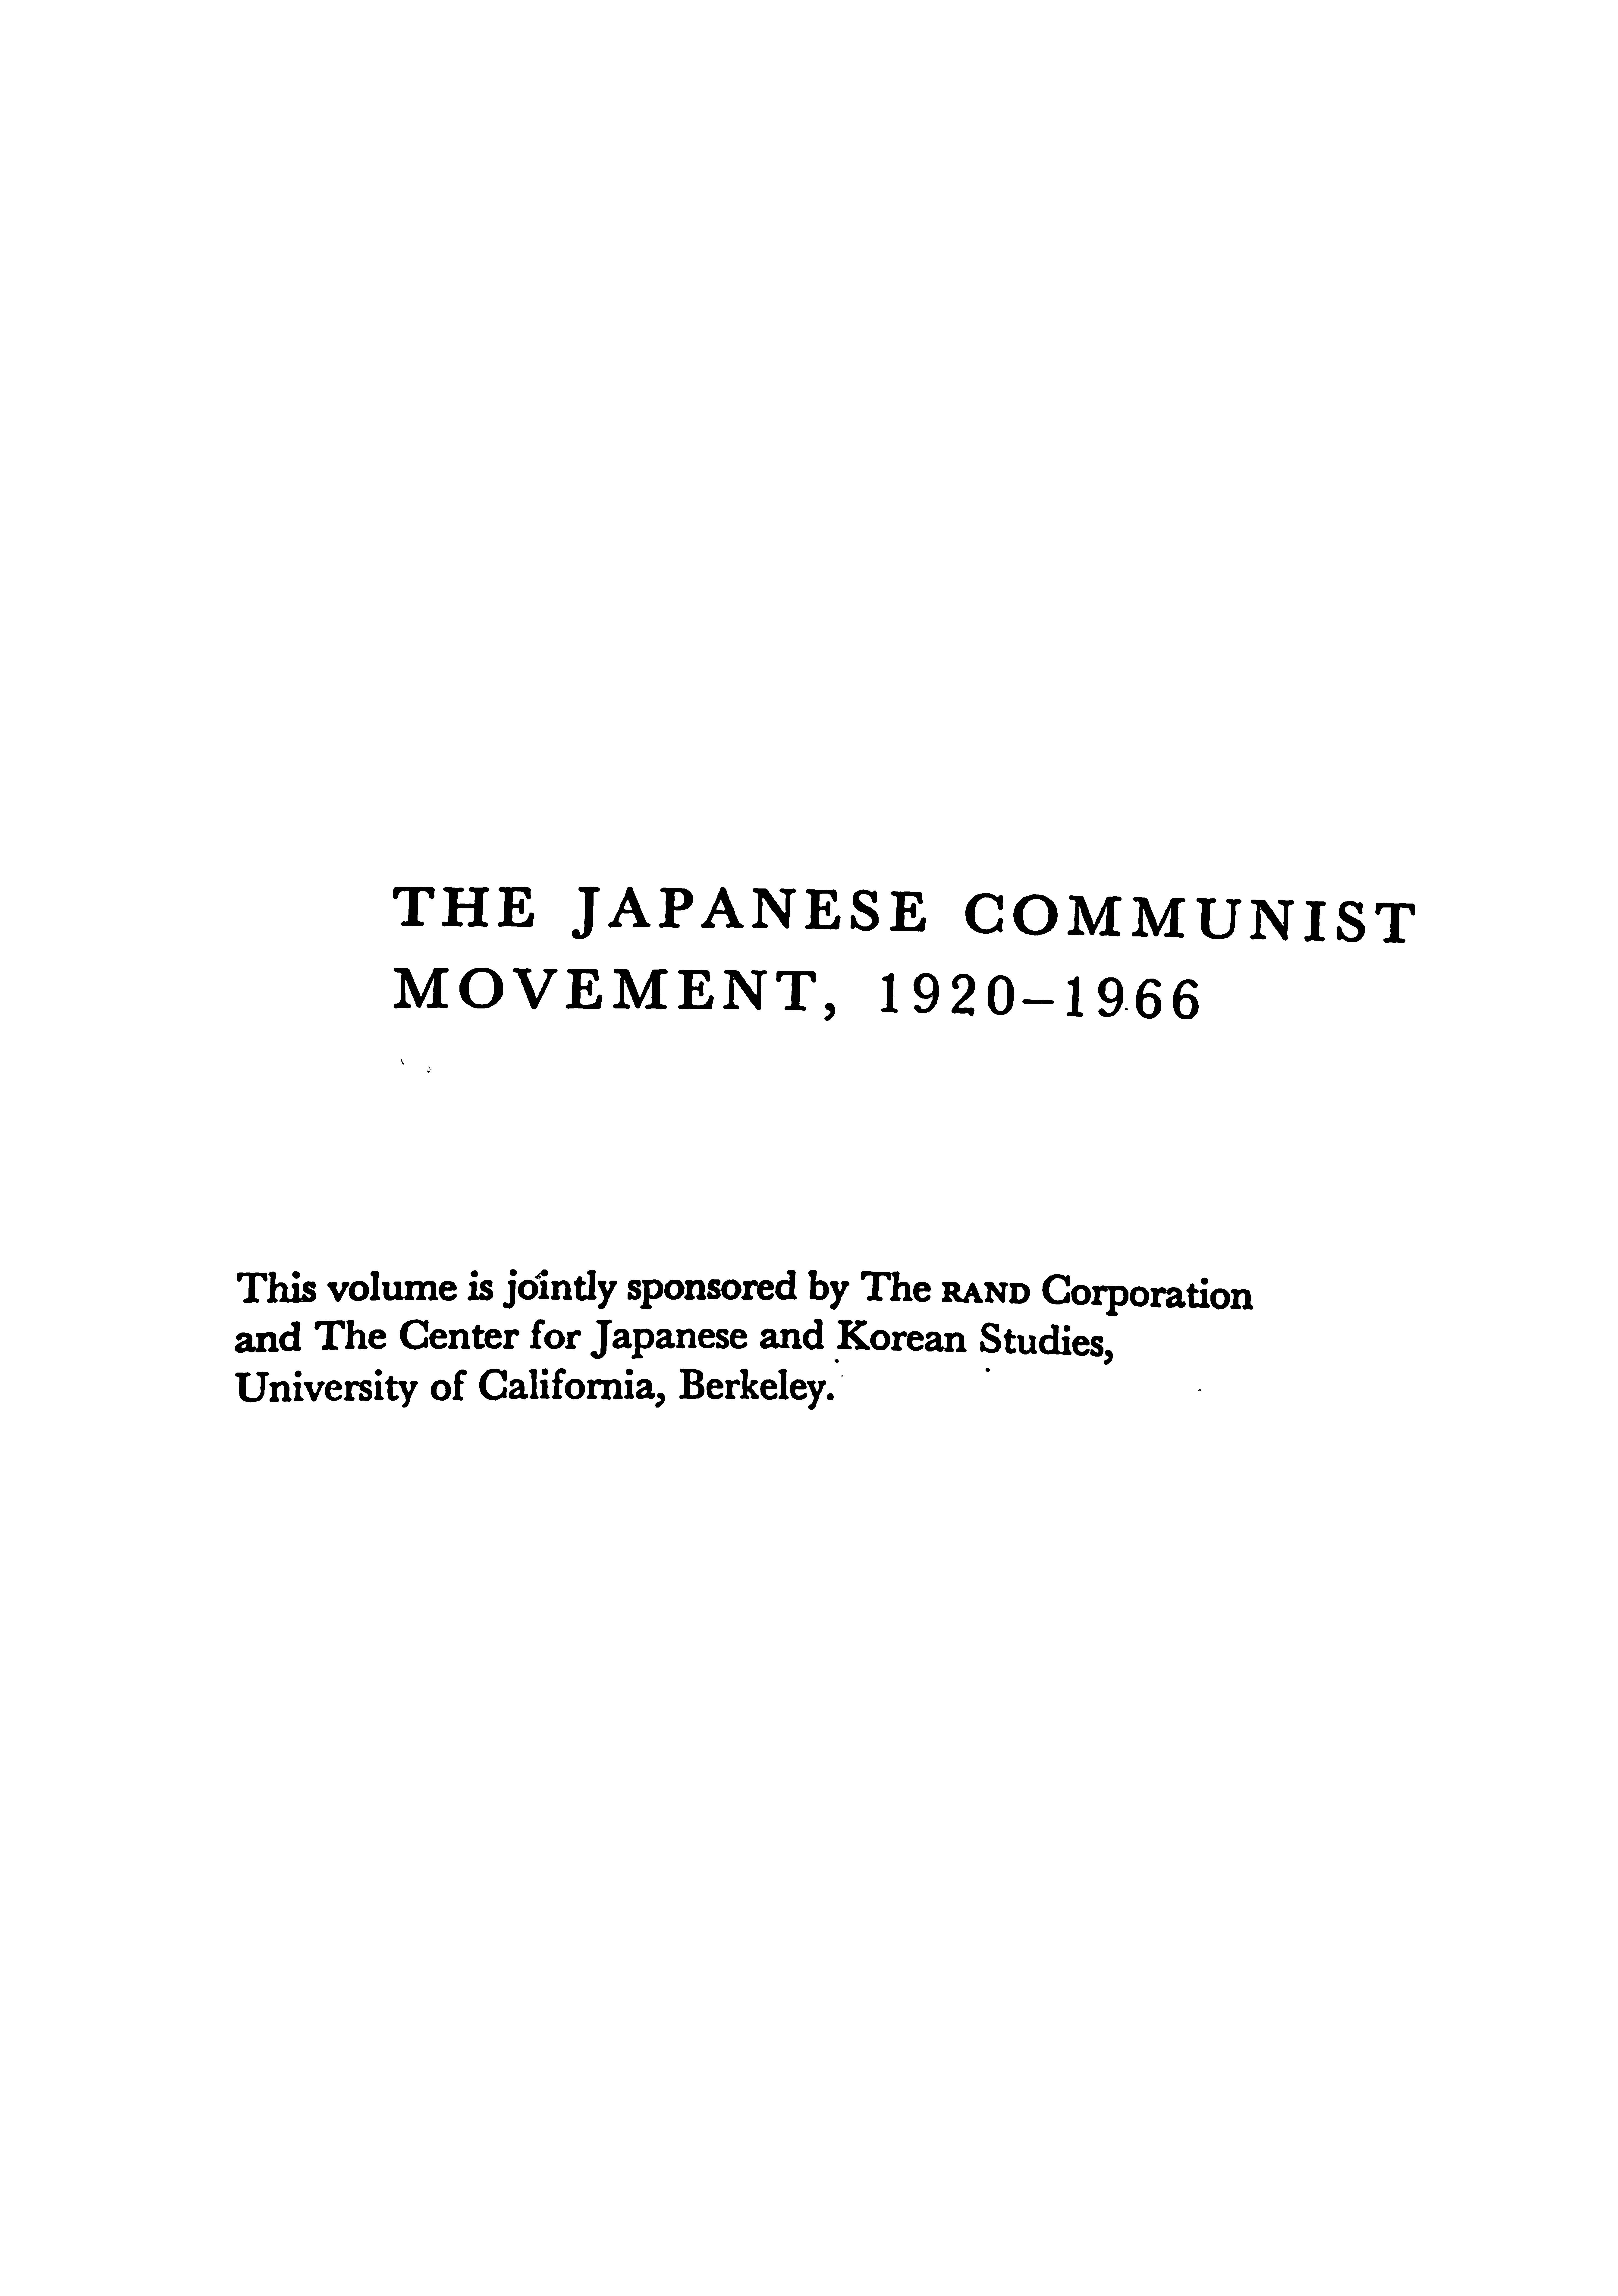 The japanese communist movement, 1920-1966